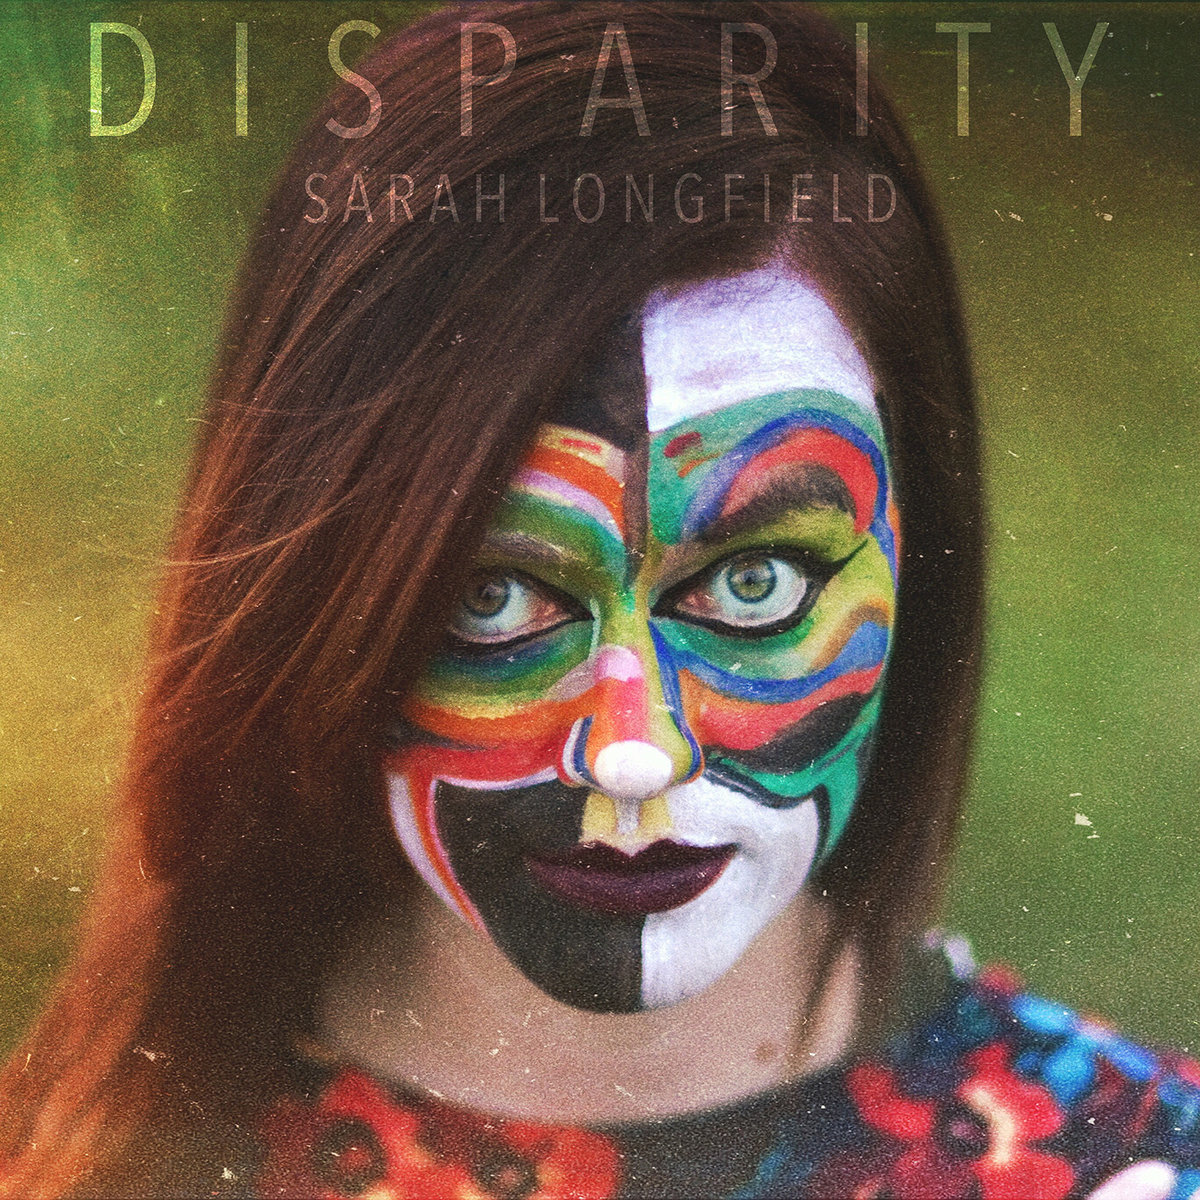 SARAH LONGFIELD - Disparity cover 